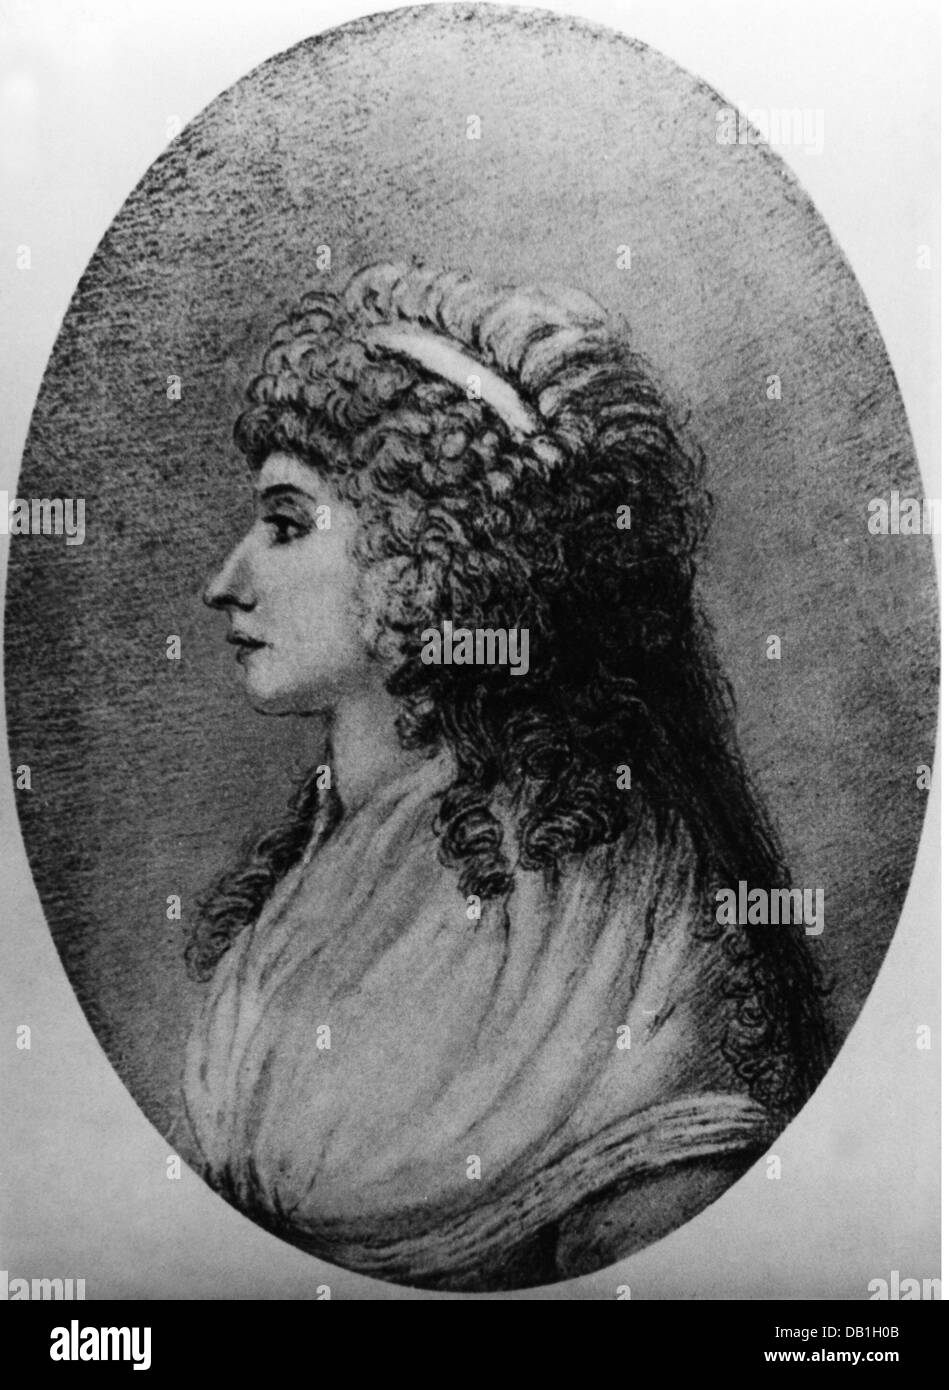 Stein, Charlotte von, 25.12.1742 - 6.1.1827, German lady-in-waiting, portrait, drawing by Dora Stock, 1796, Stock Photo